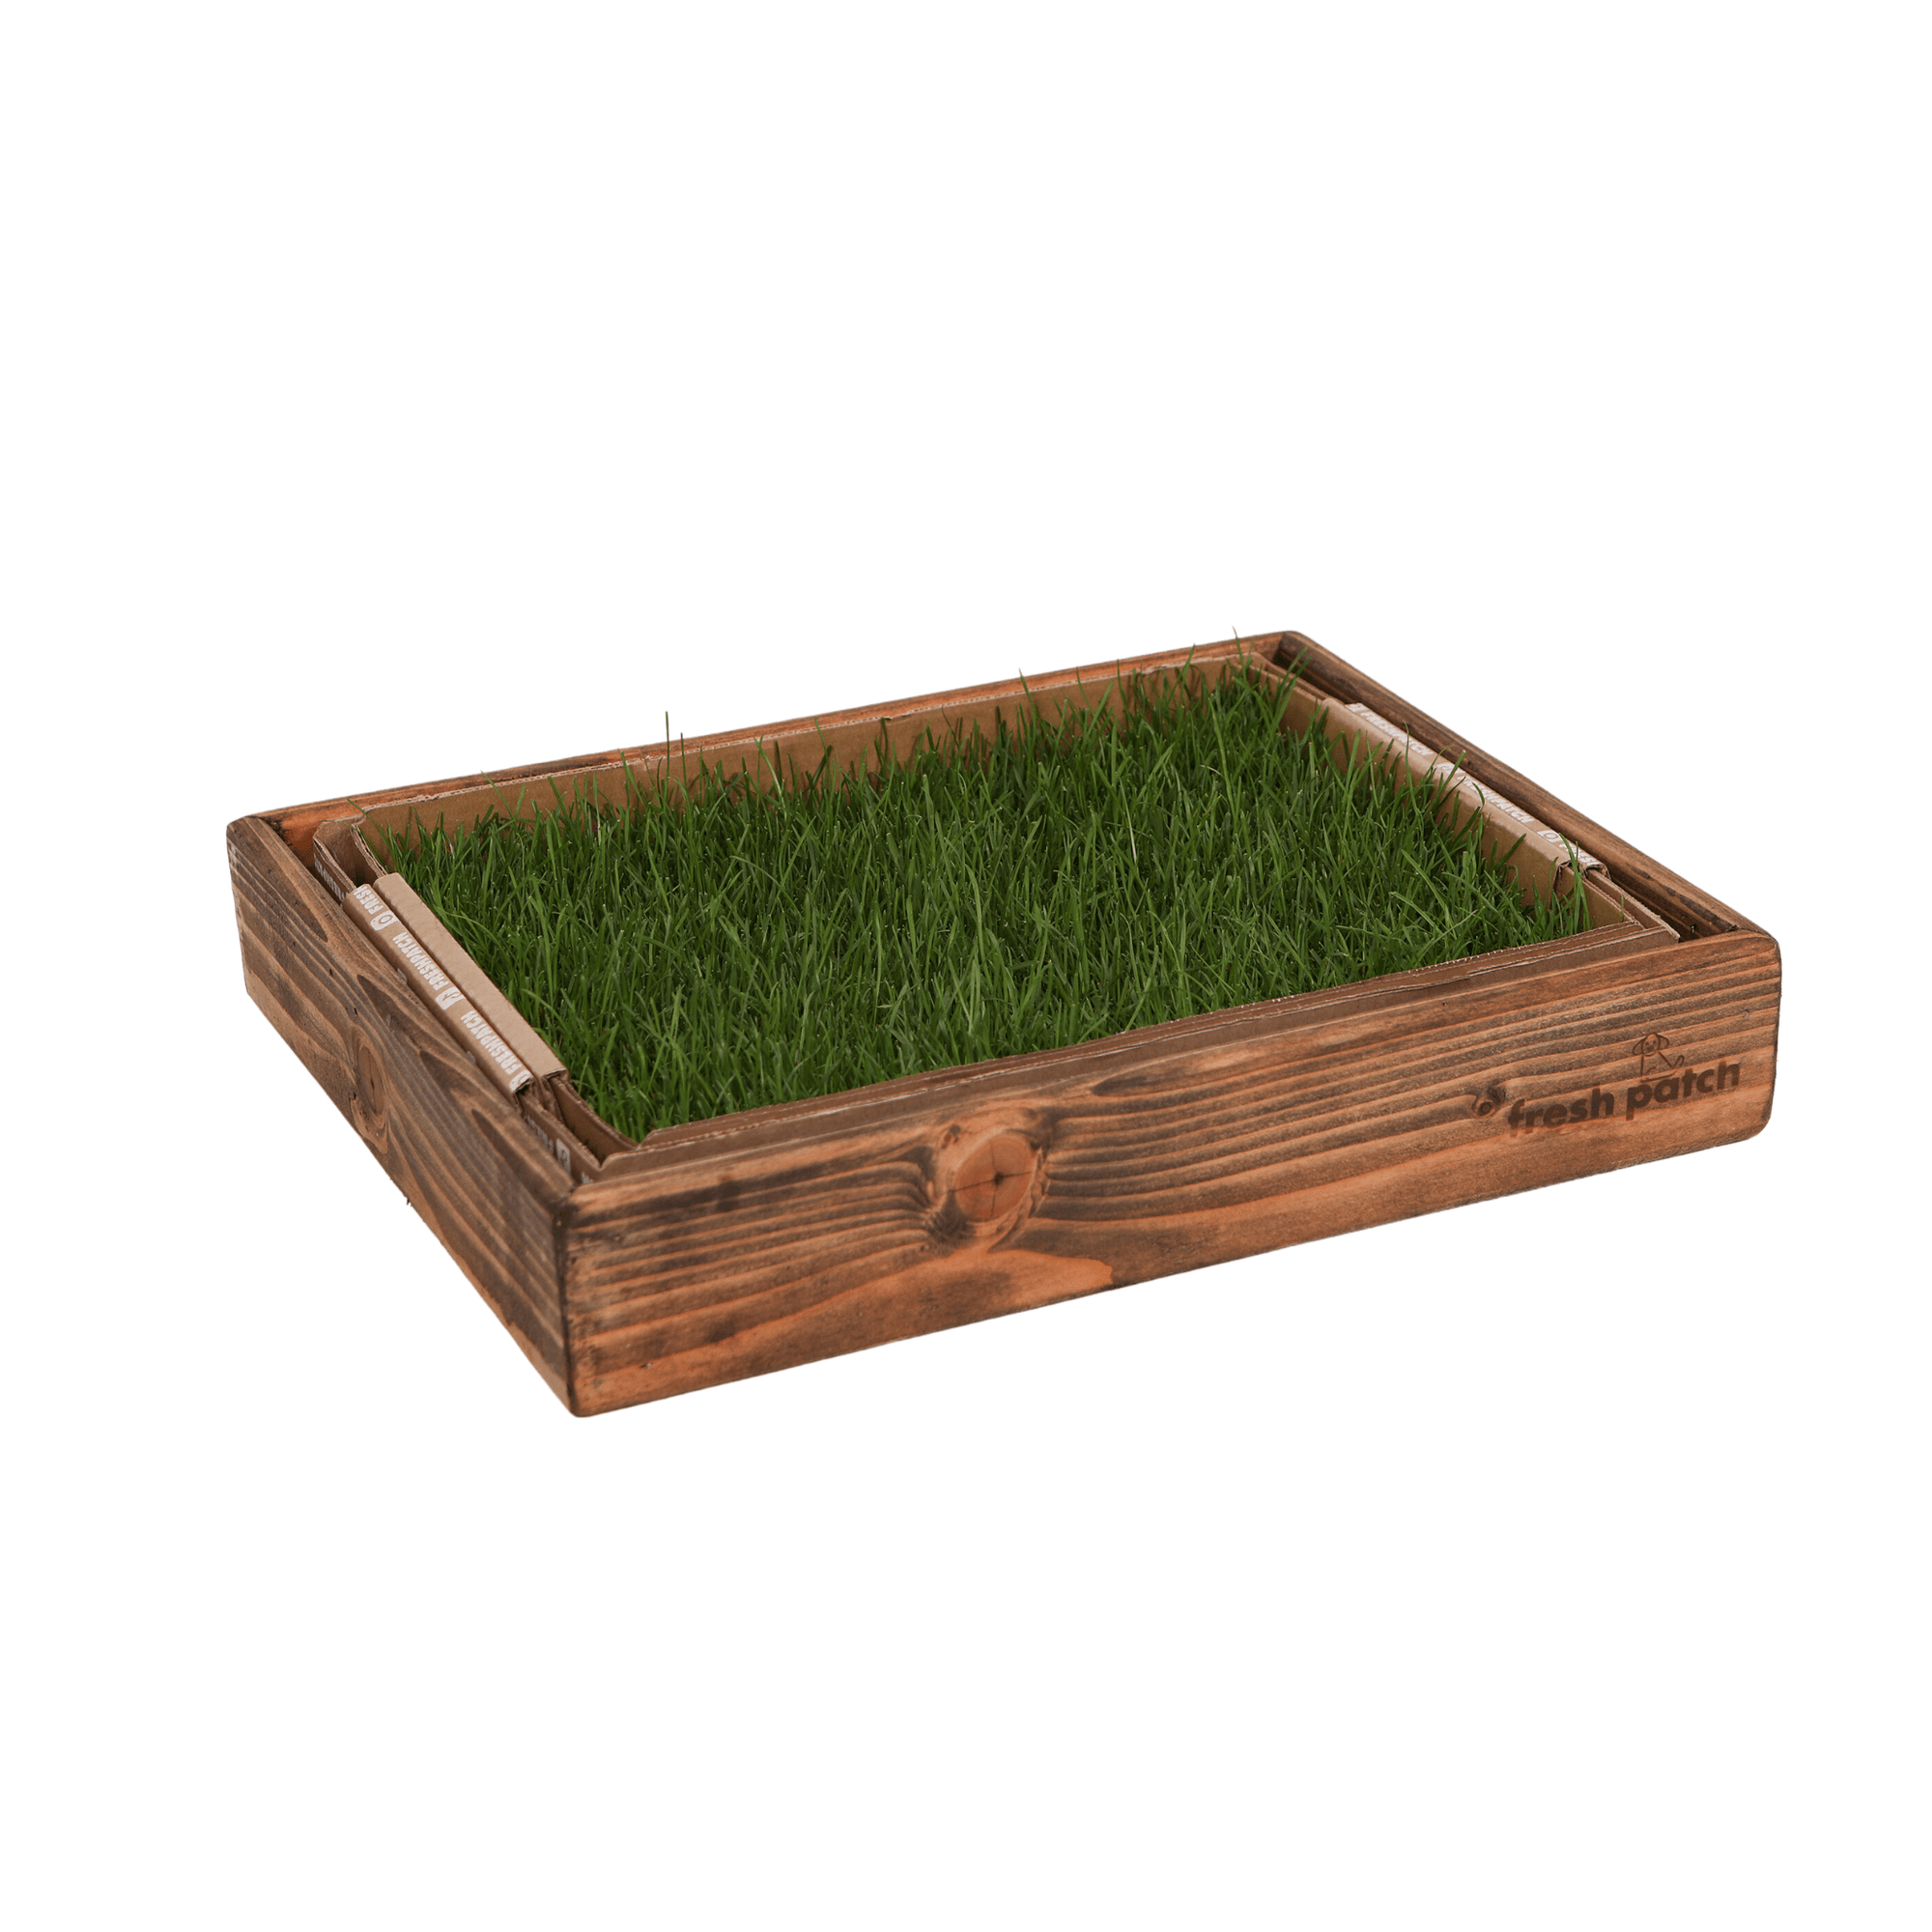 MINI Fresh Patch Grass with Oak Wood Sleeve